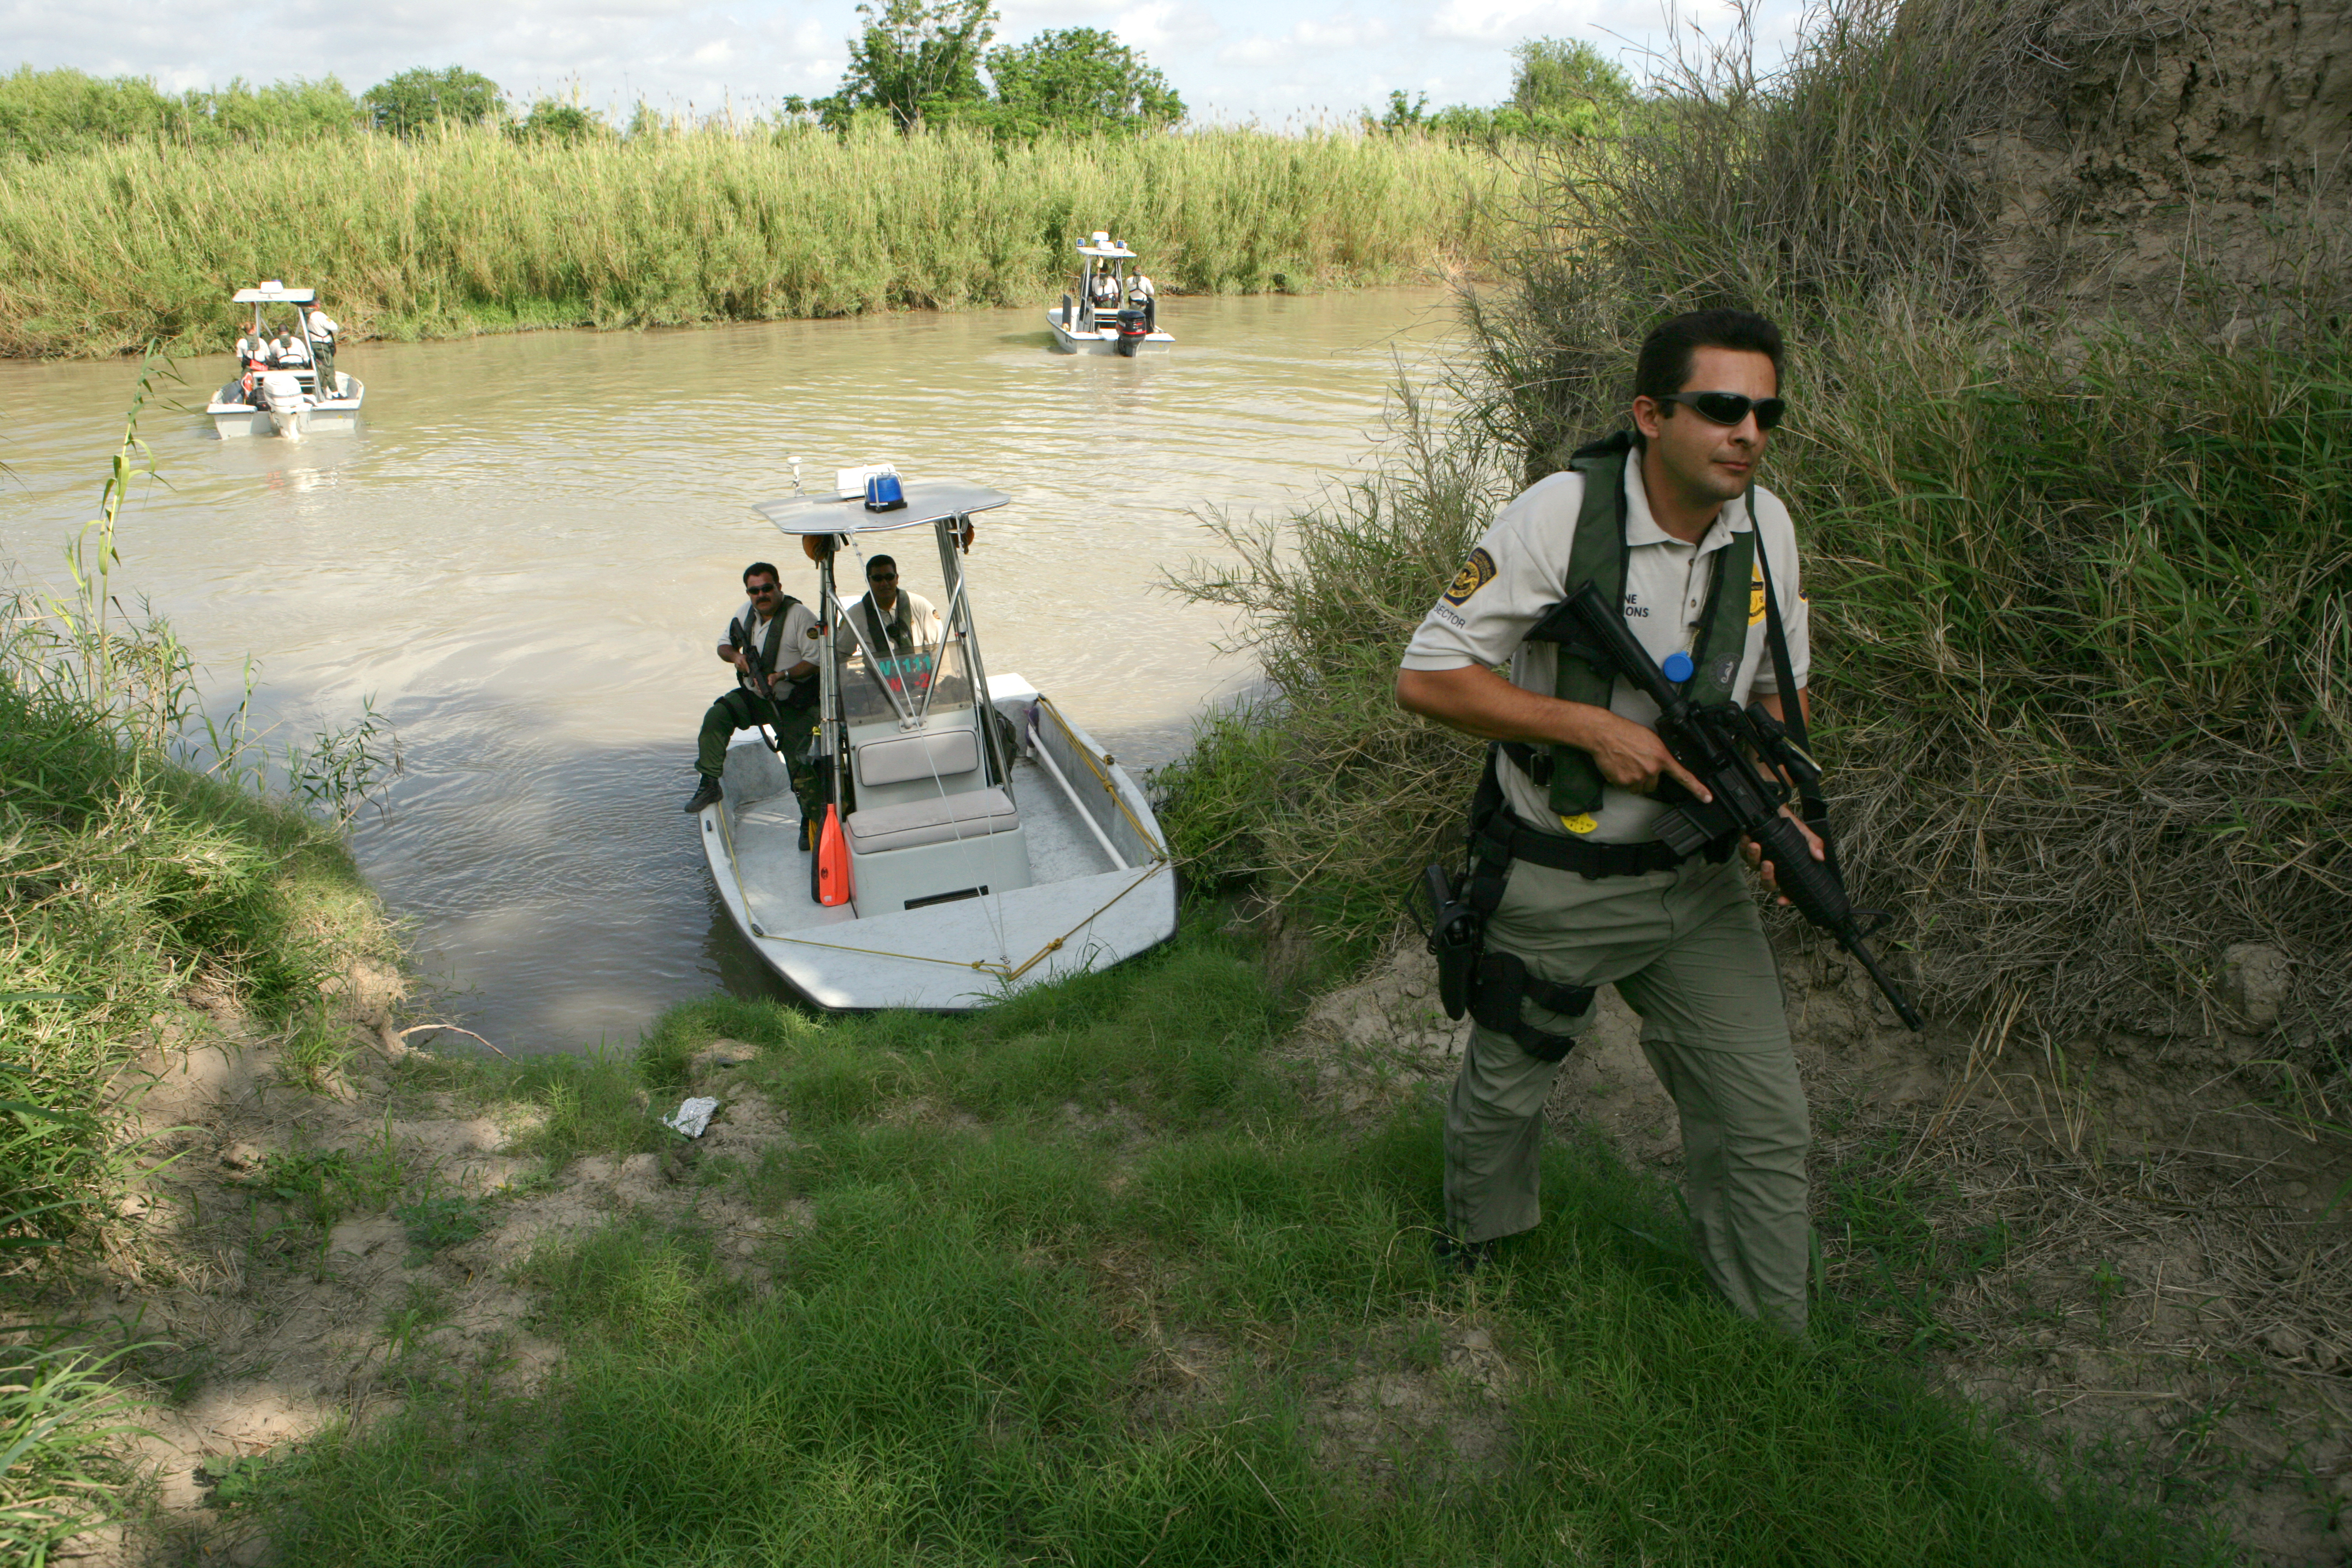 U.S. Border Patrol agent investigates a potential landing area for illegal immigrants along the Rio Grande River in Texas.